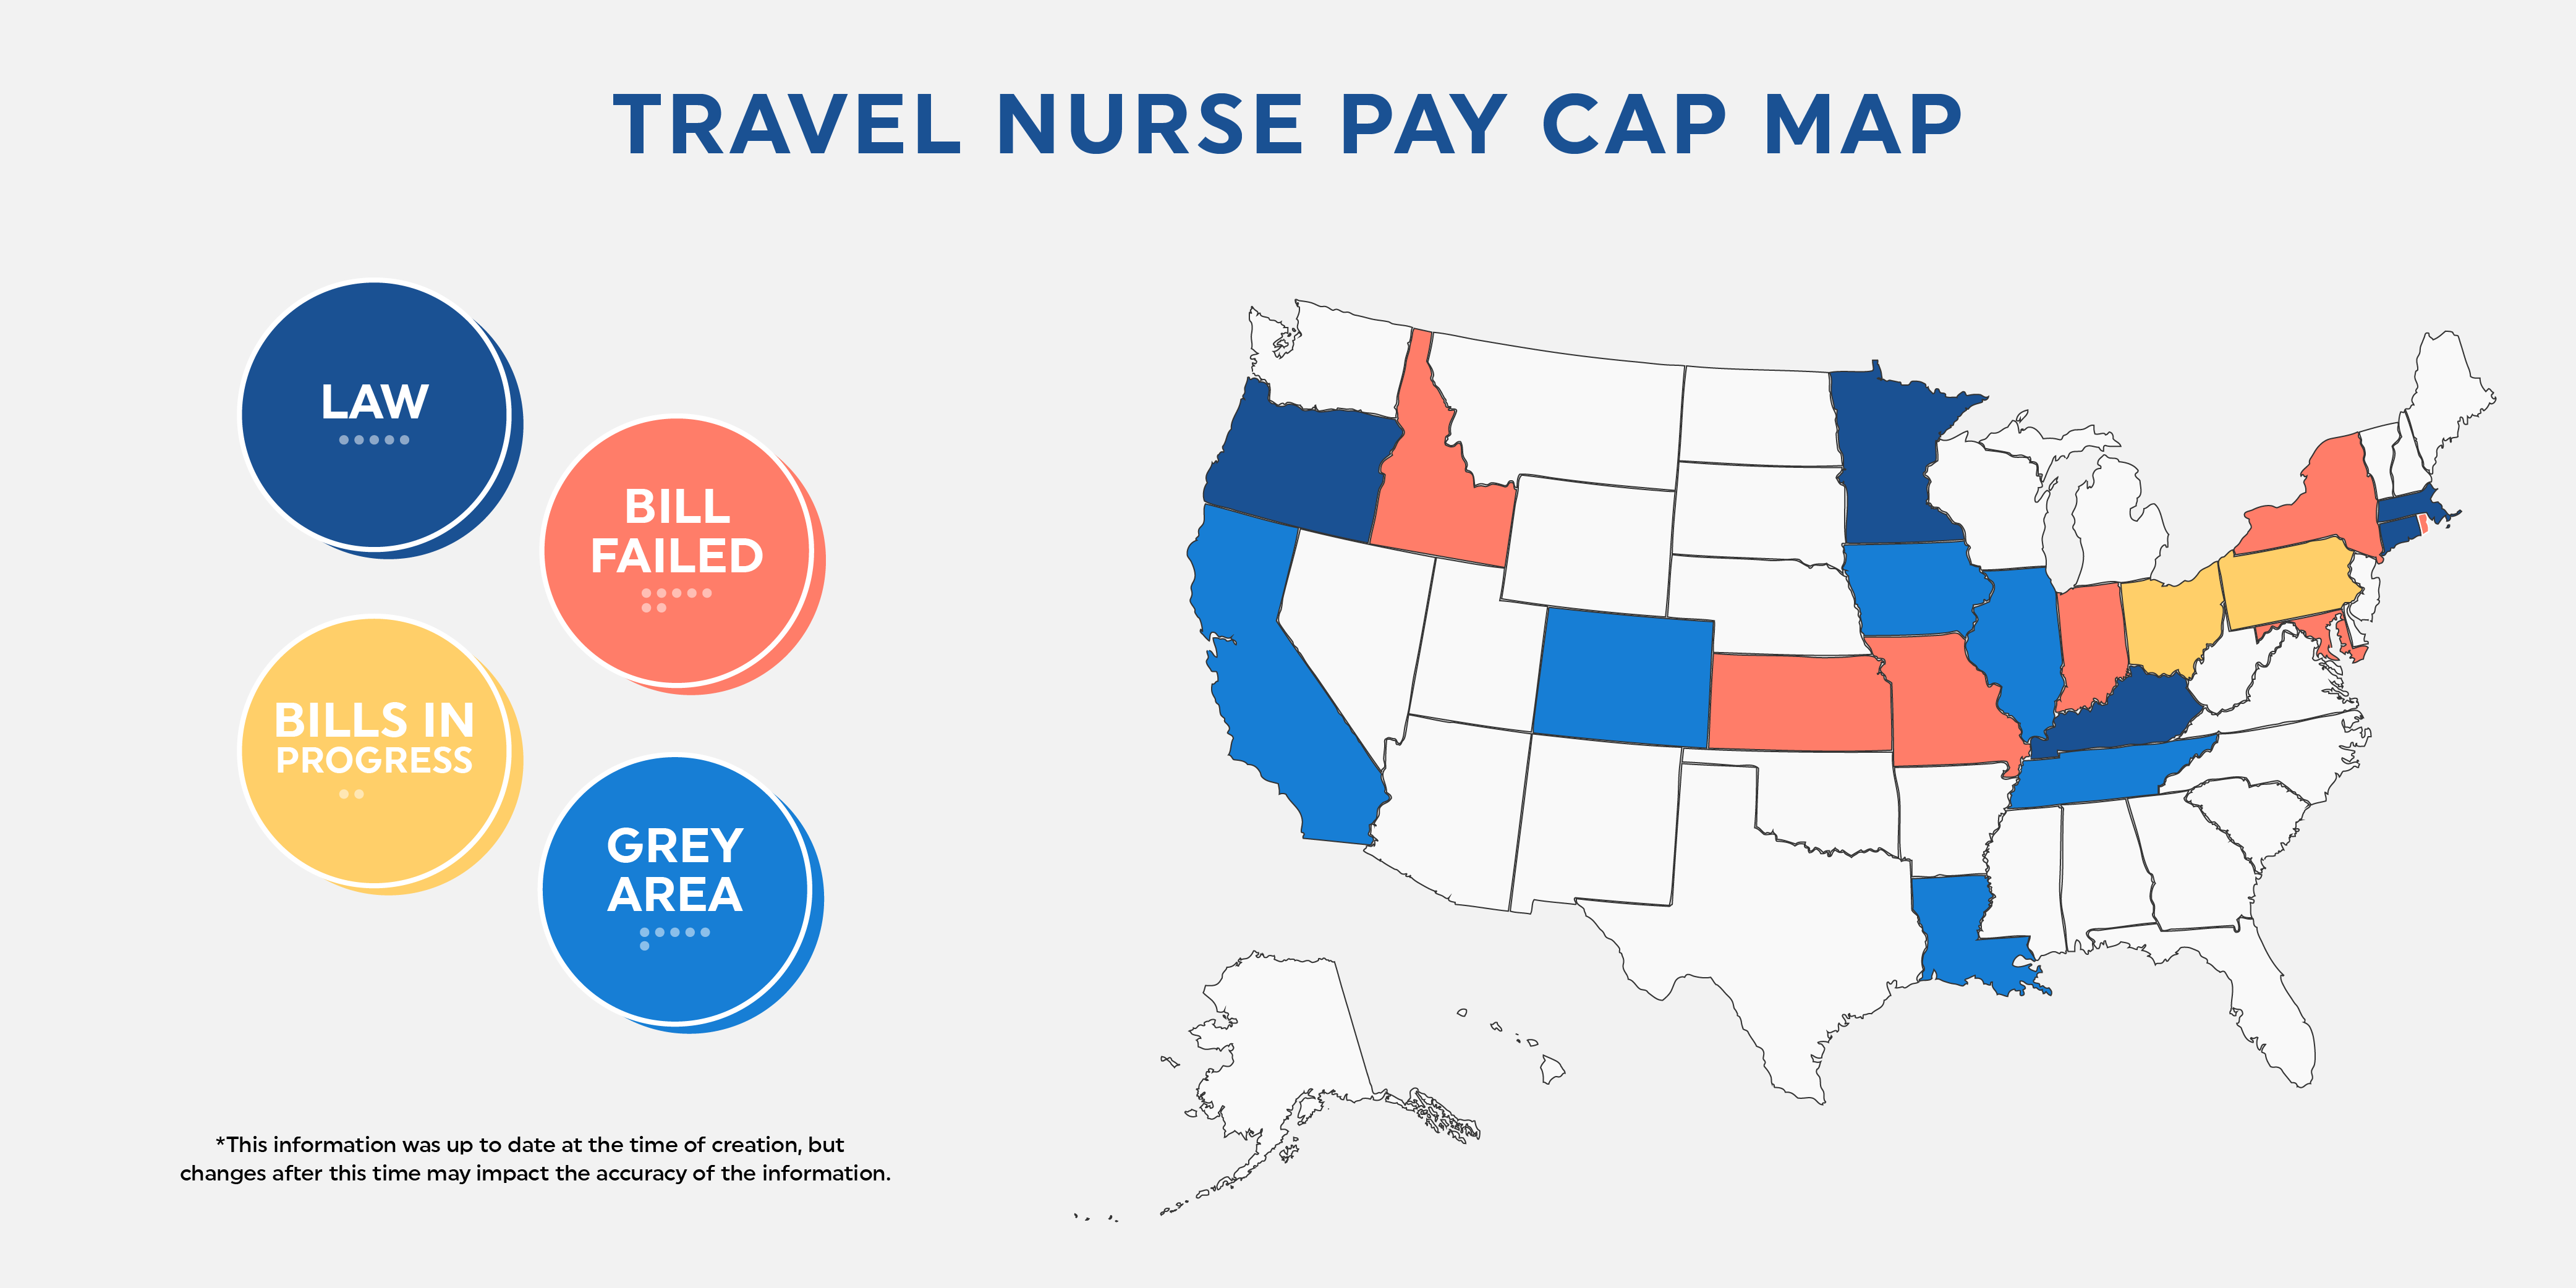 Travel Nurse Pay Cap Legislation by State